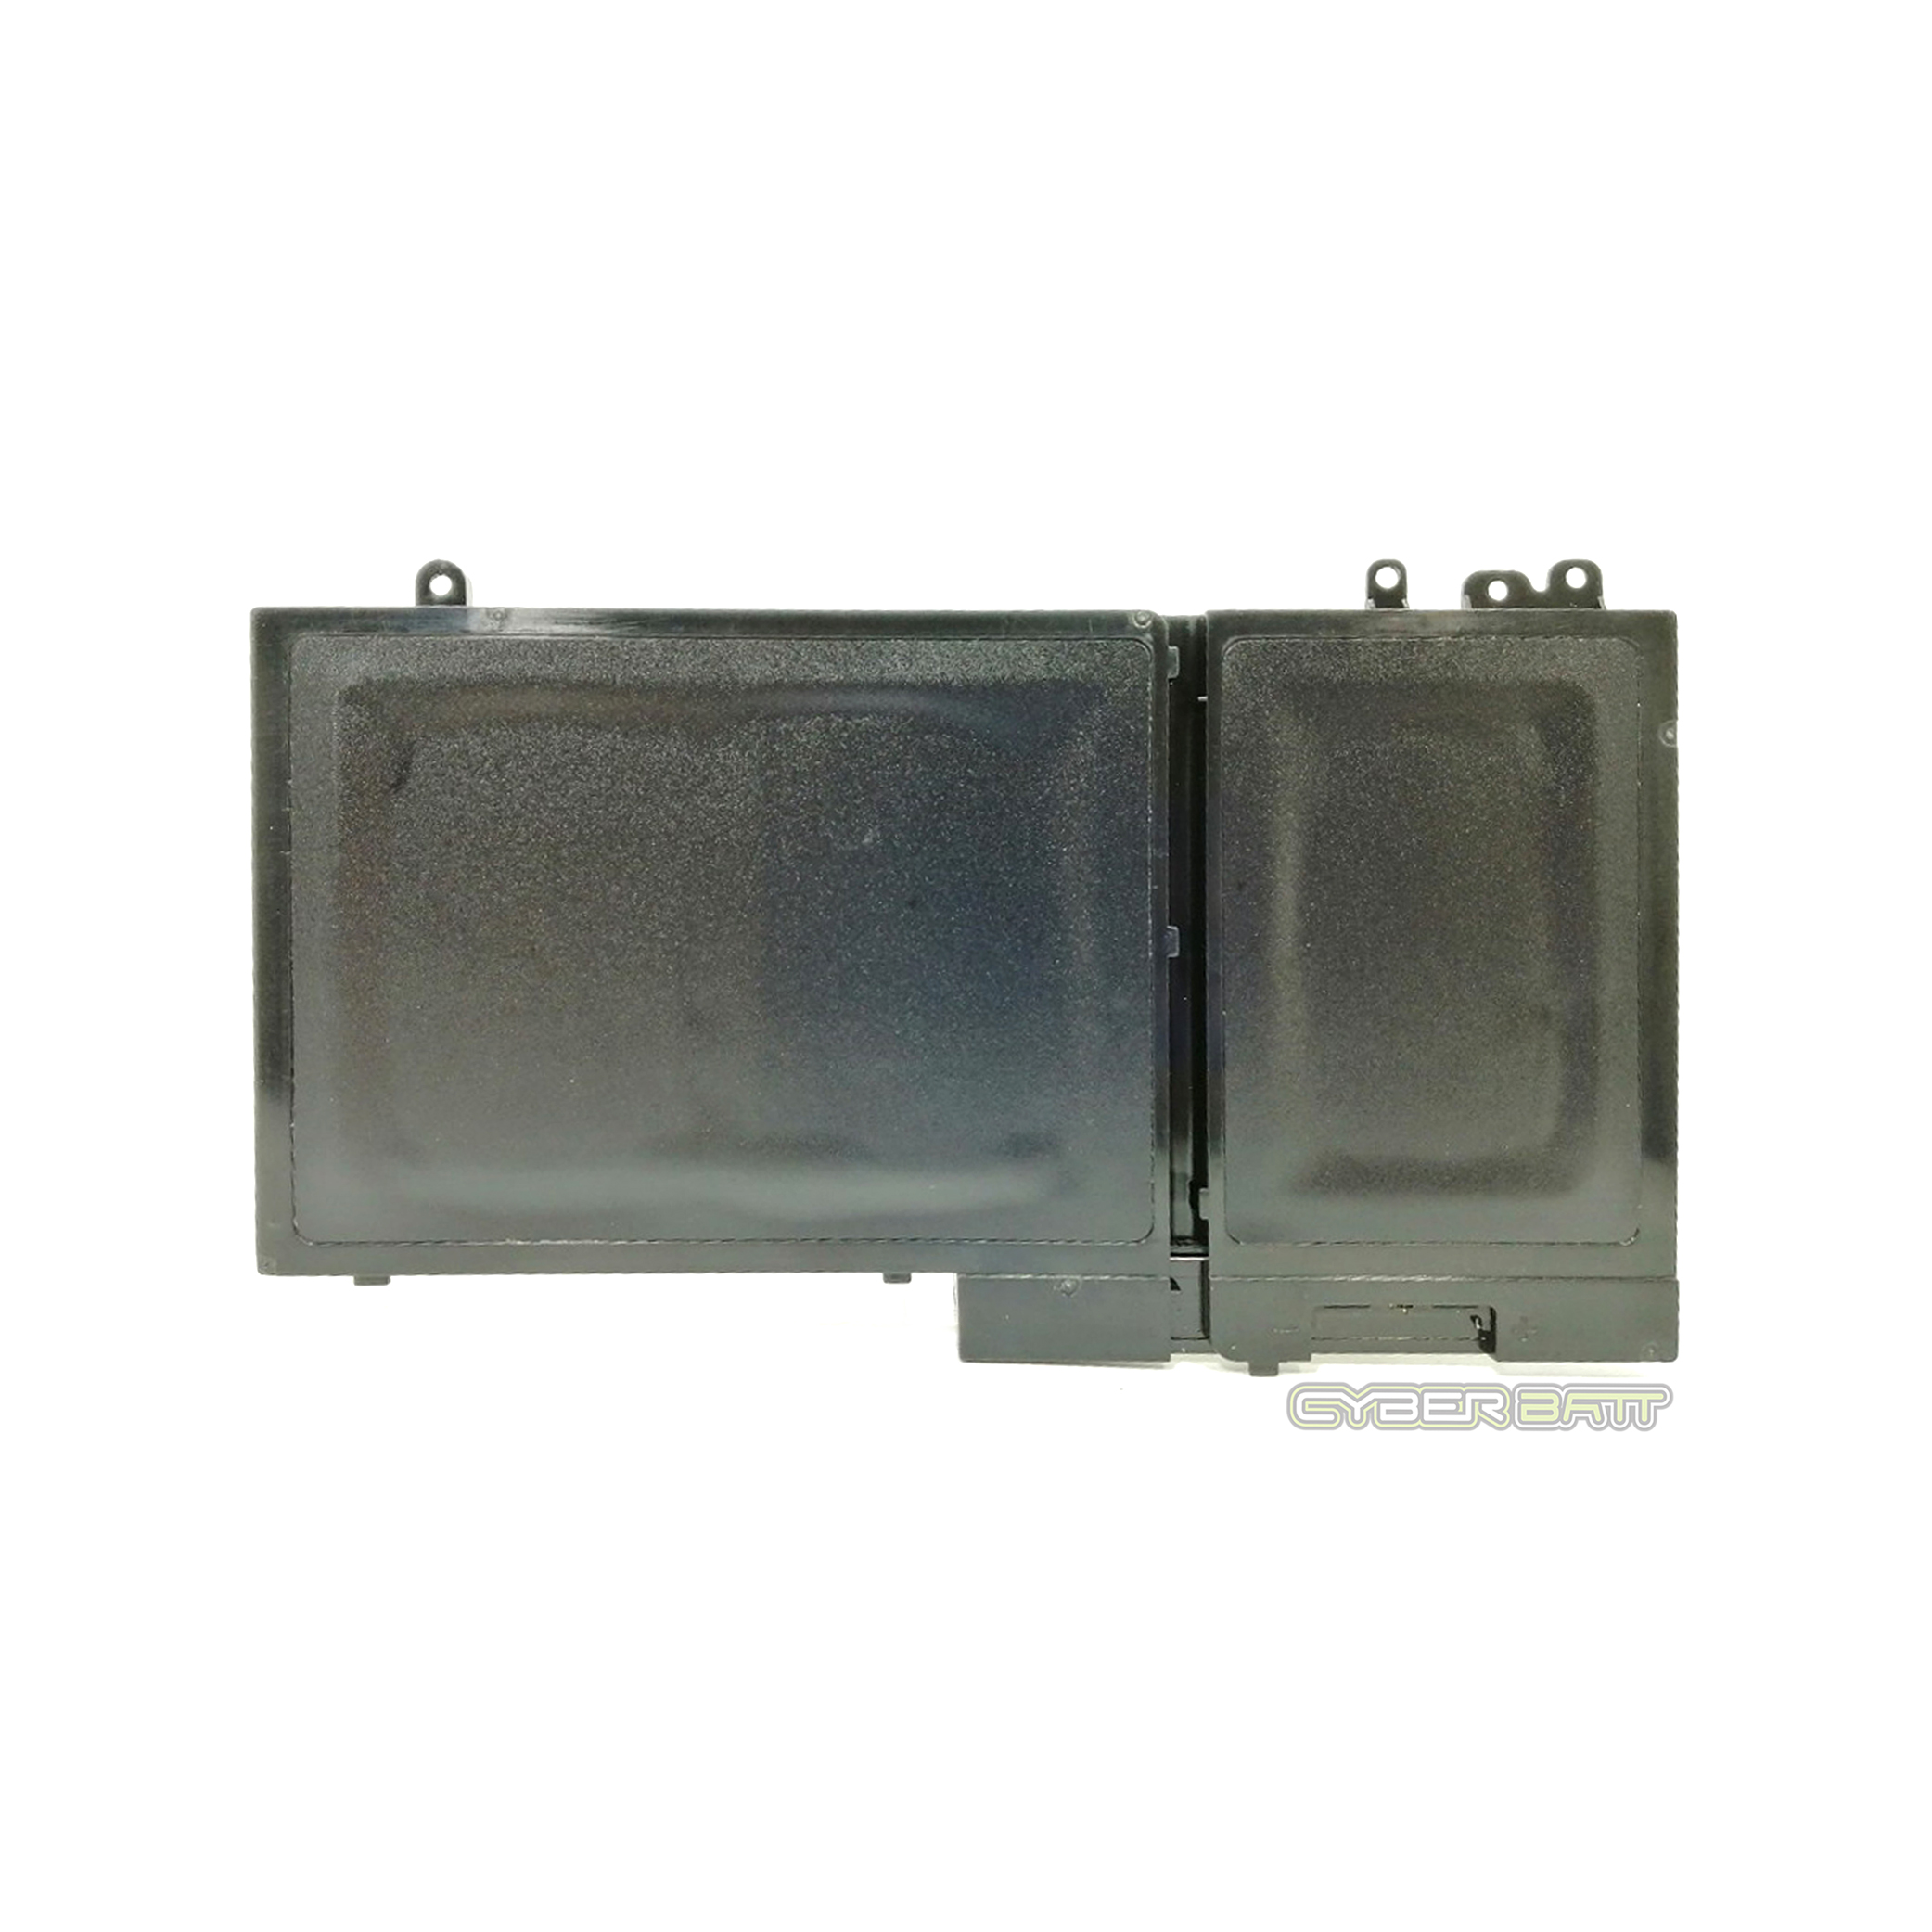 Battery Dell Latitude E5550 RYXXH : 11.1V-3400mAh/38Wh Black (OEM)